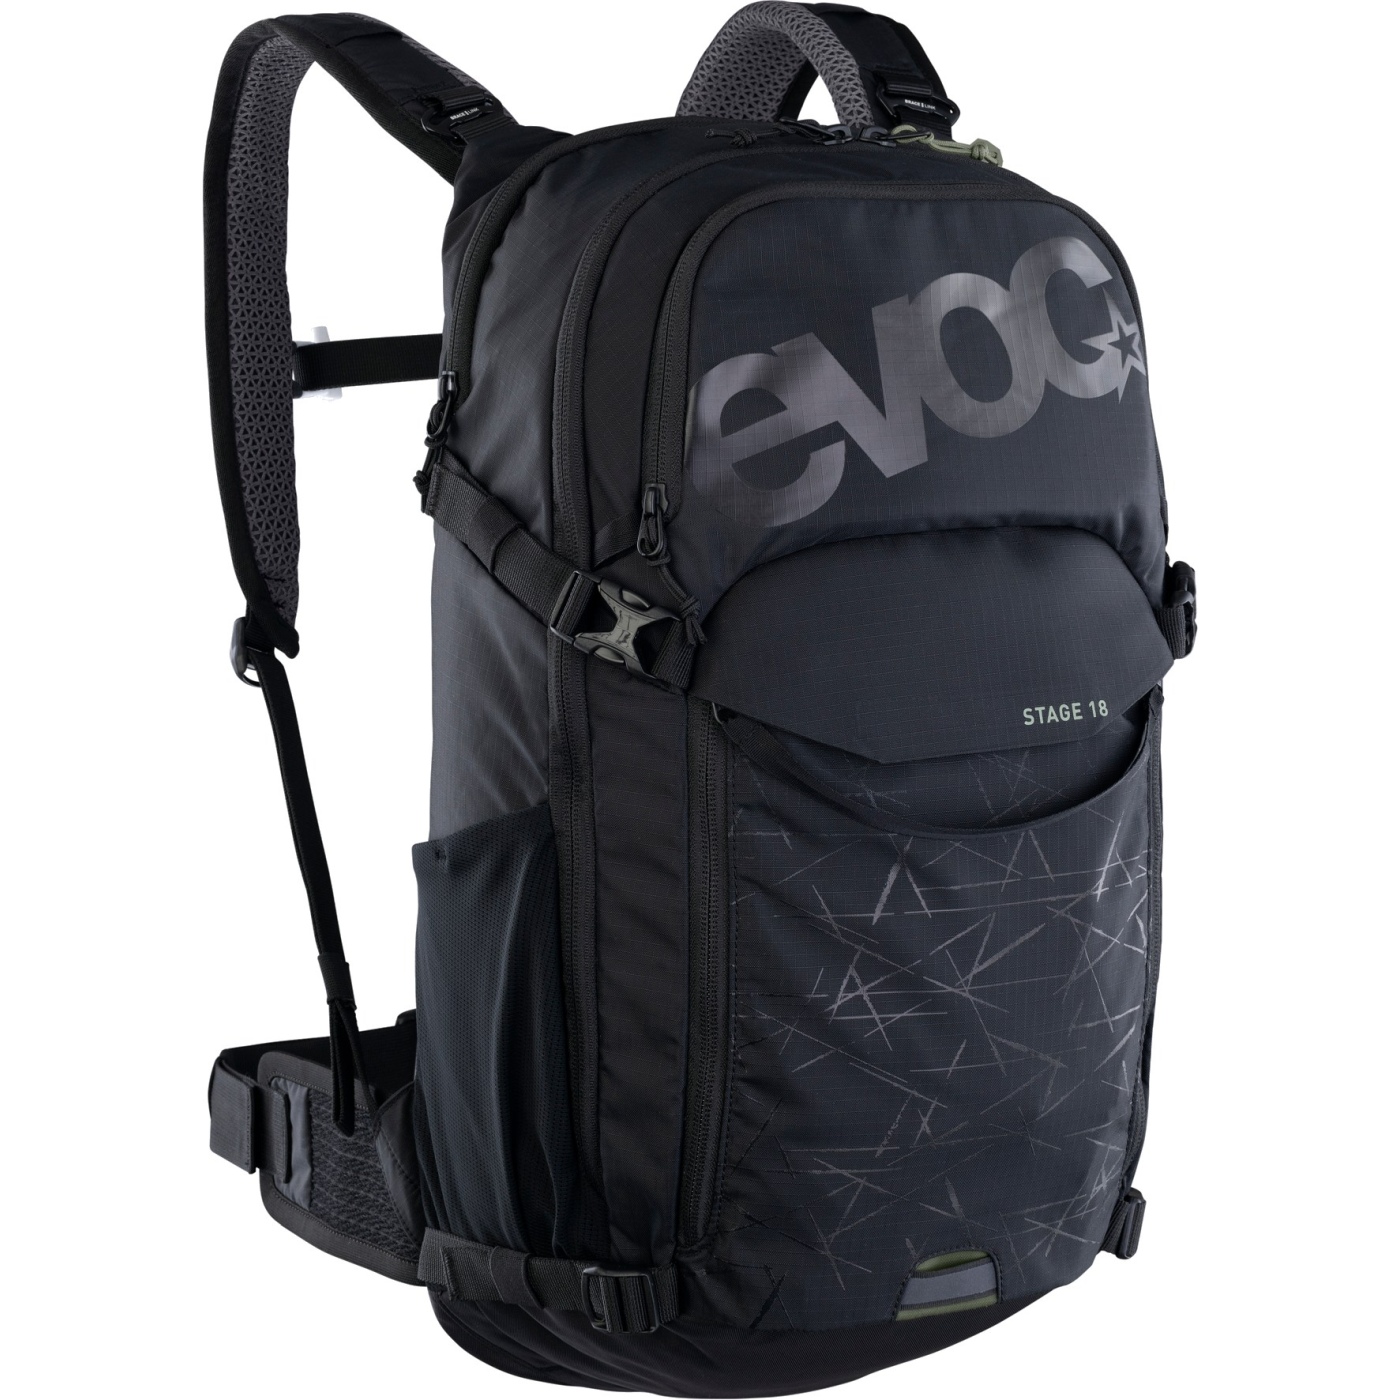 Picture of EVOC Stage Backpack - 18 L - Black